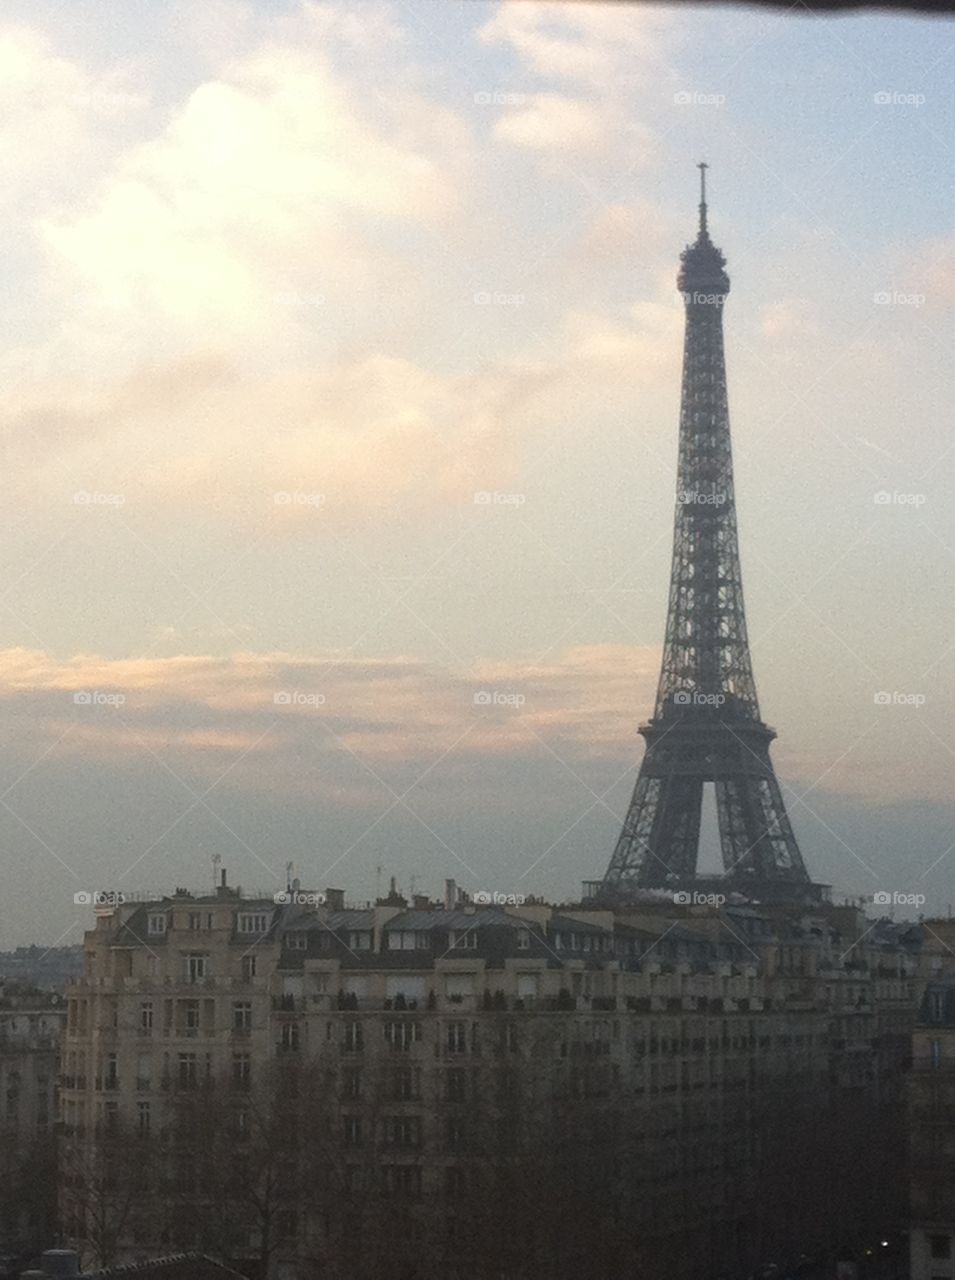 Paris at dawn